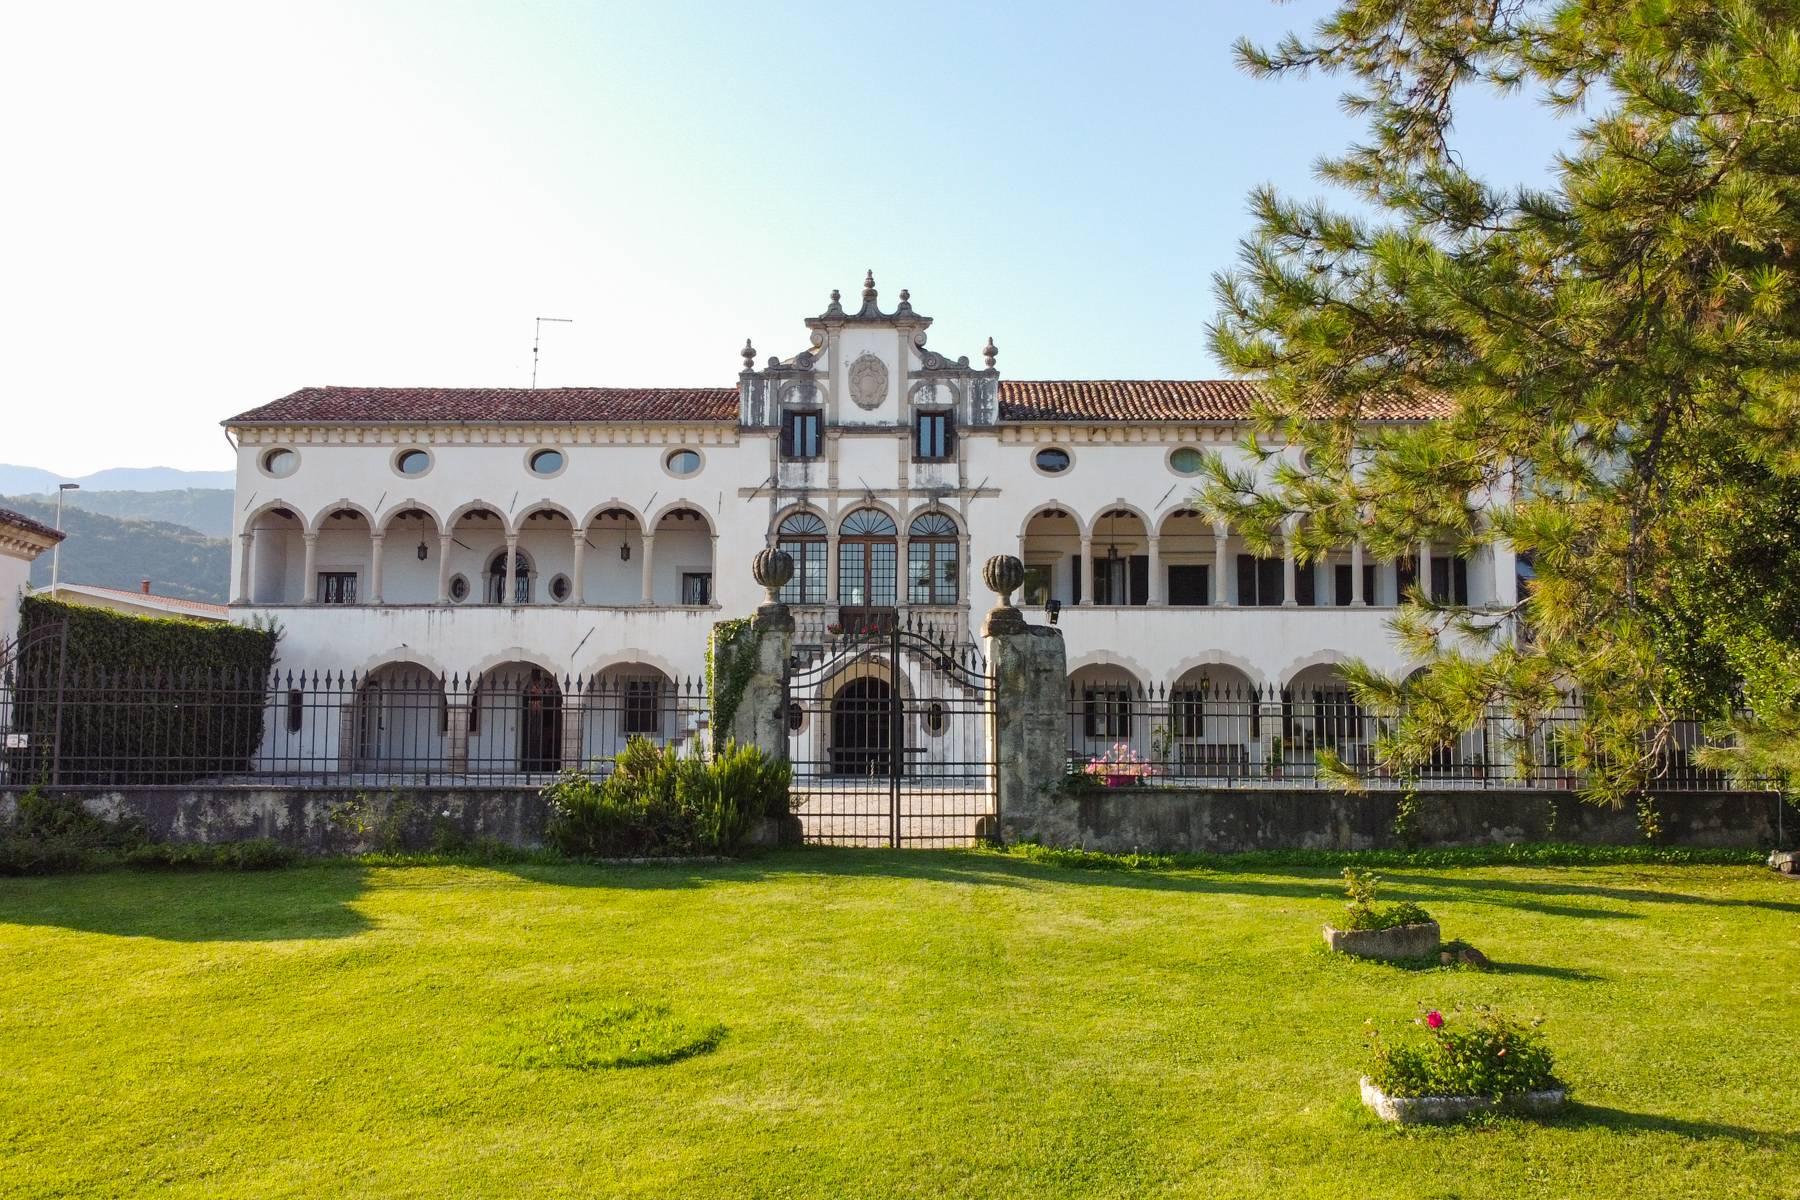 Elegante Villa Veneta con parco sulle colline vittoriesi - 1